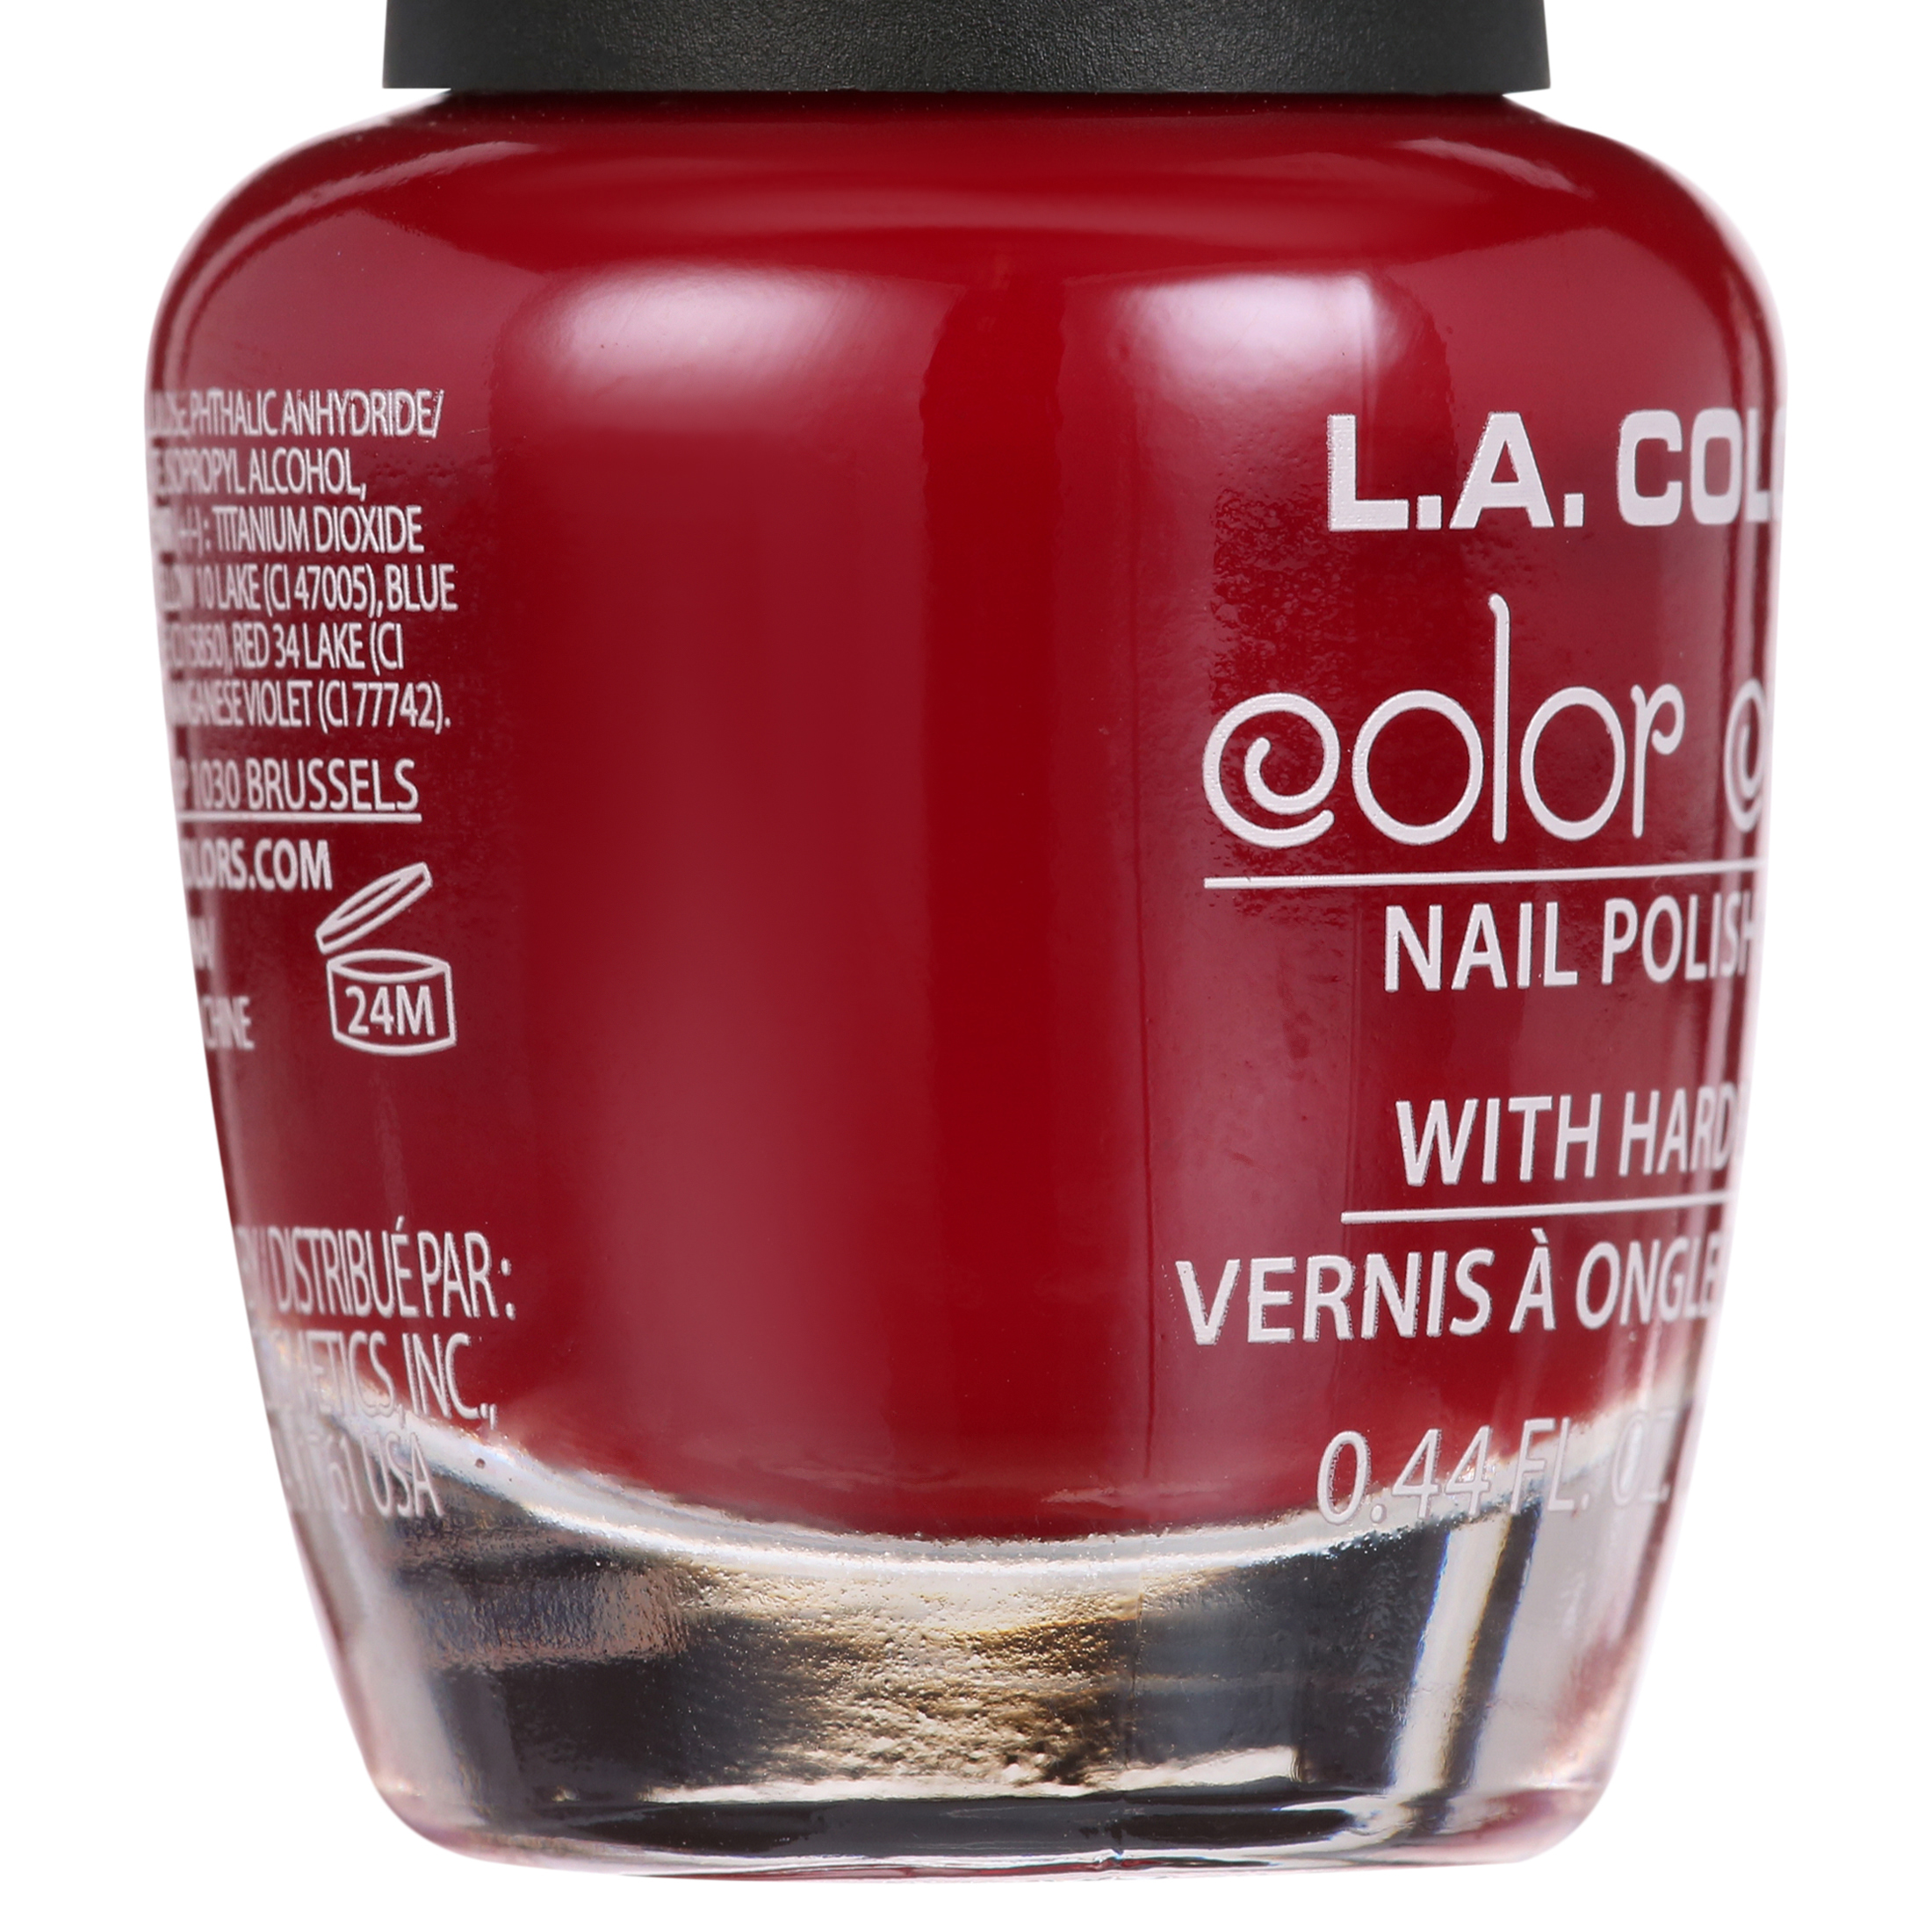 L.A. COLORS Color Craze Nail Polish, Hot Blooded, 0.44 fl oz - image 8 of 8